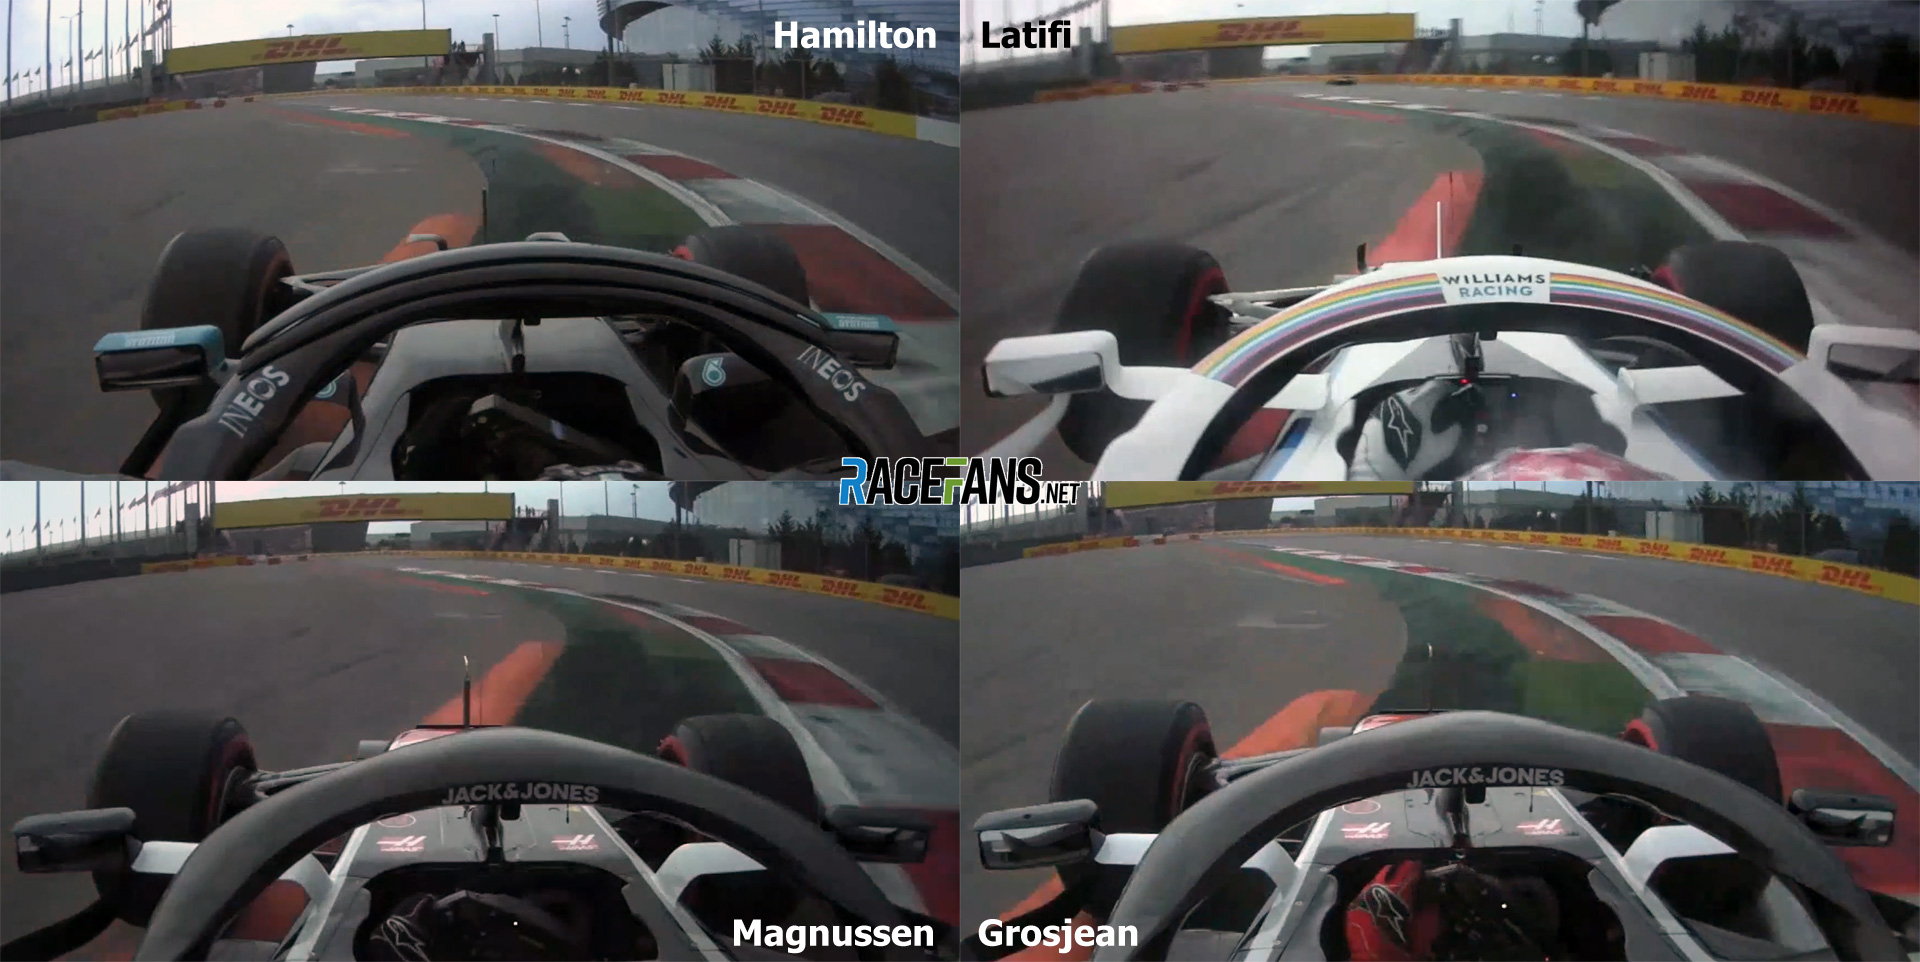 Hamilton, Latifi, Grosjean and Magnussen